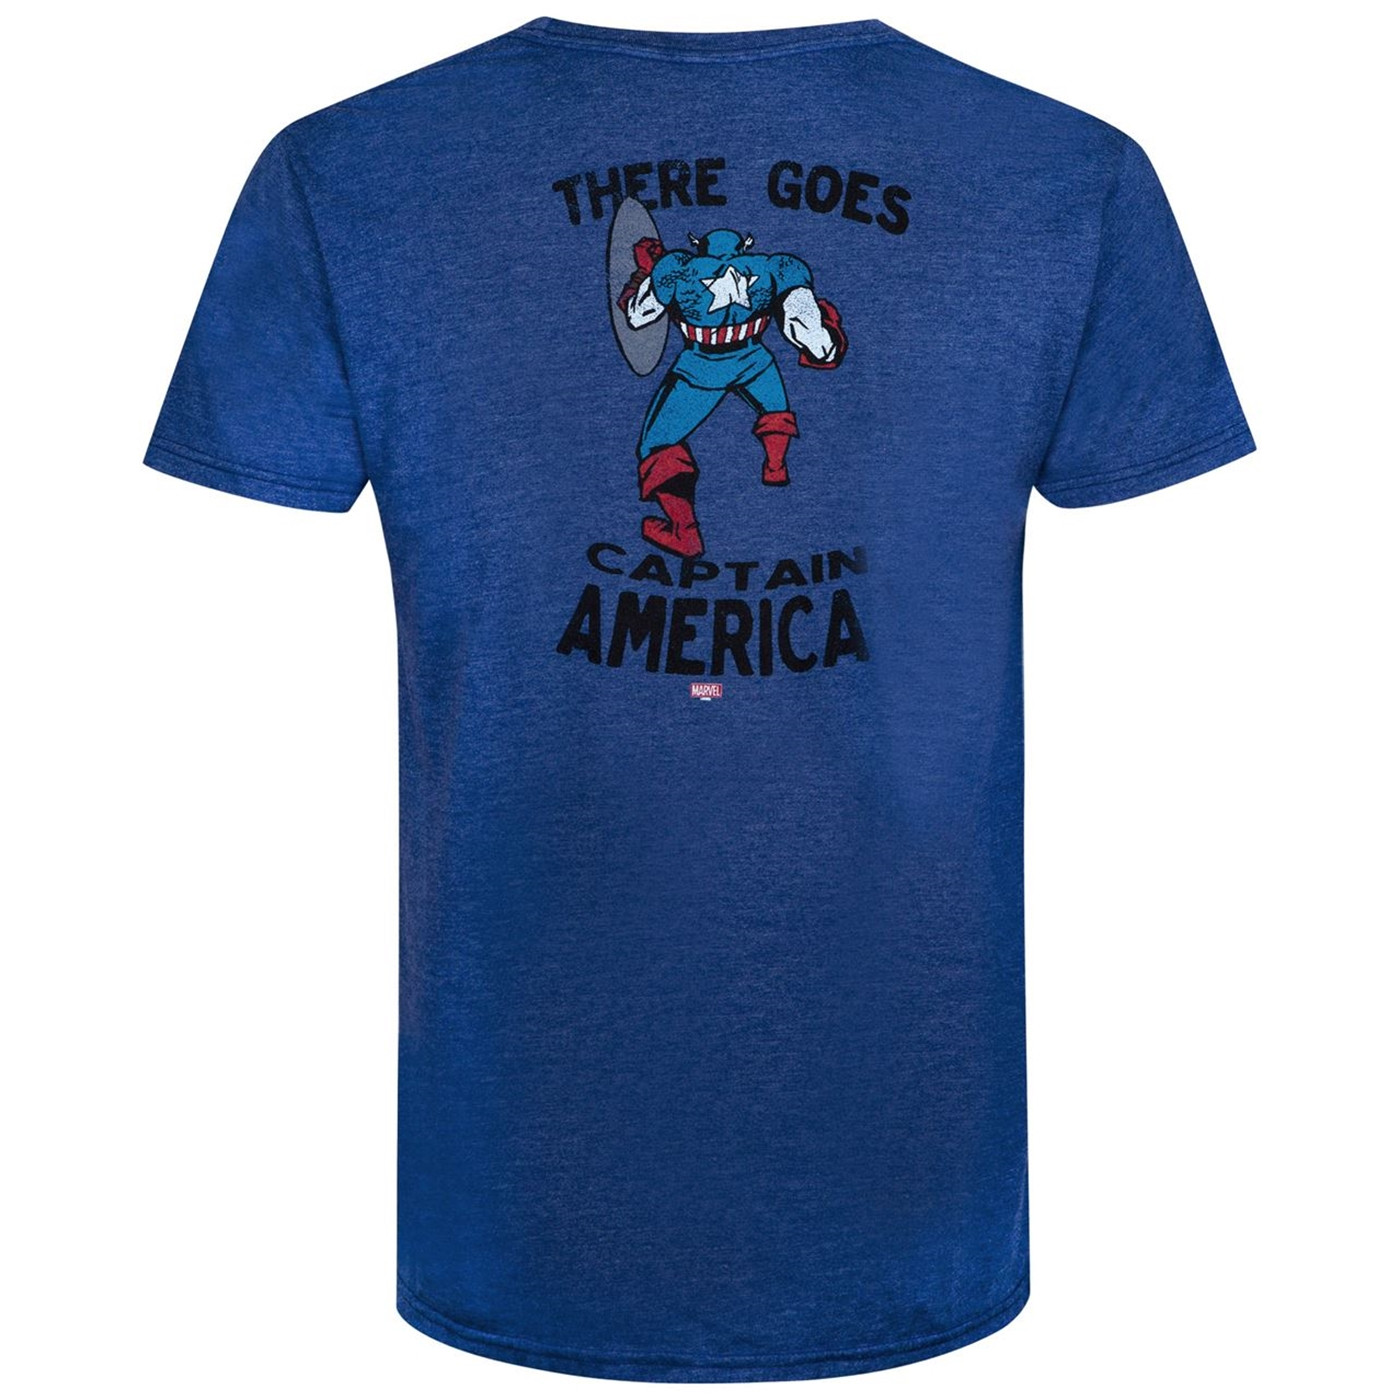 Captain America Hi & Bye Front and Back Print Retro Brand Vintage T-Shirt